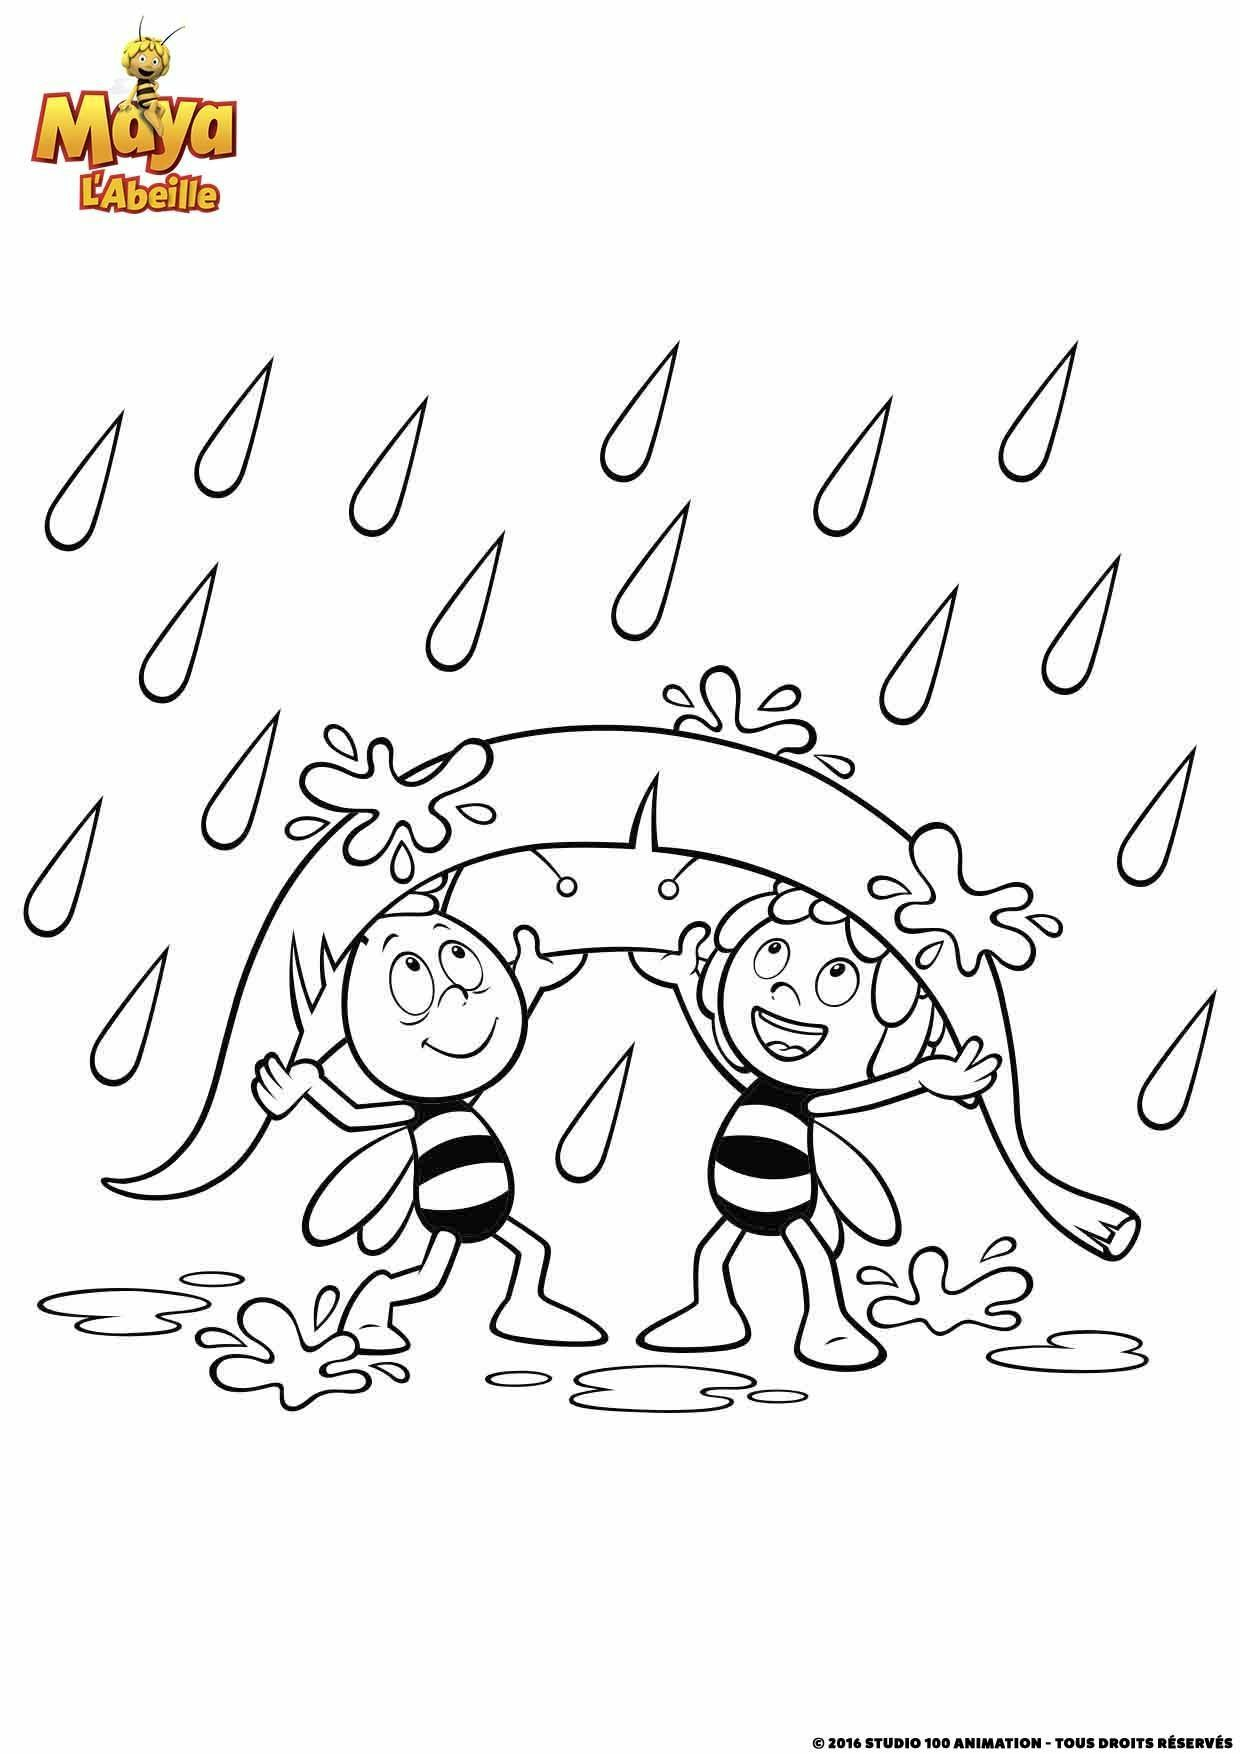   Maya et Willy contre la pluie 